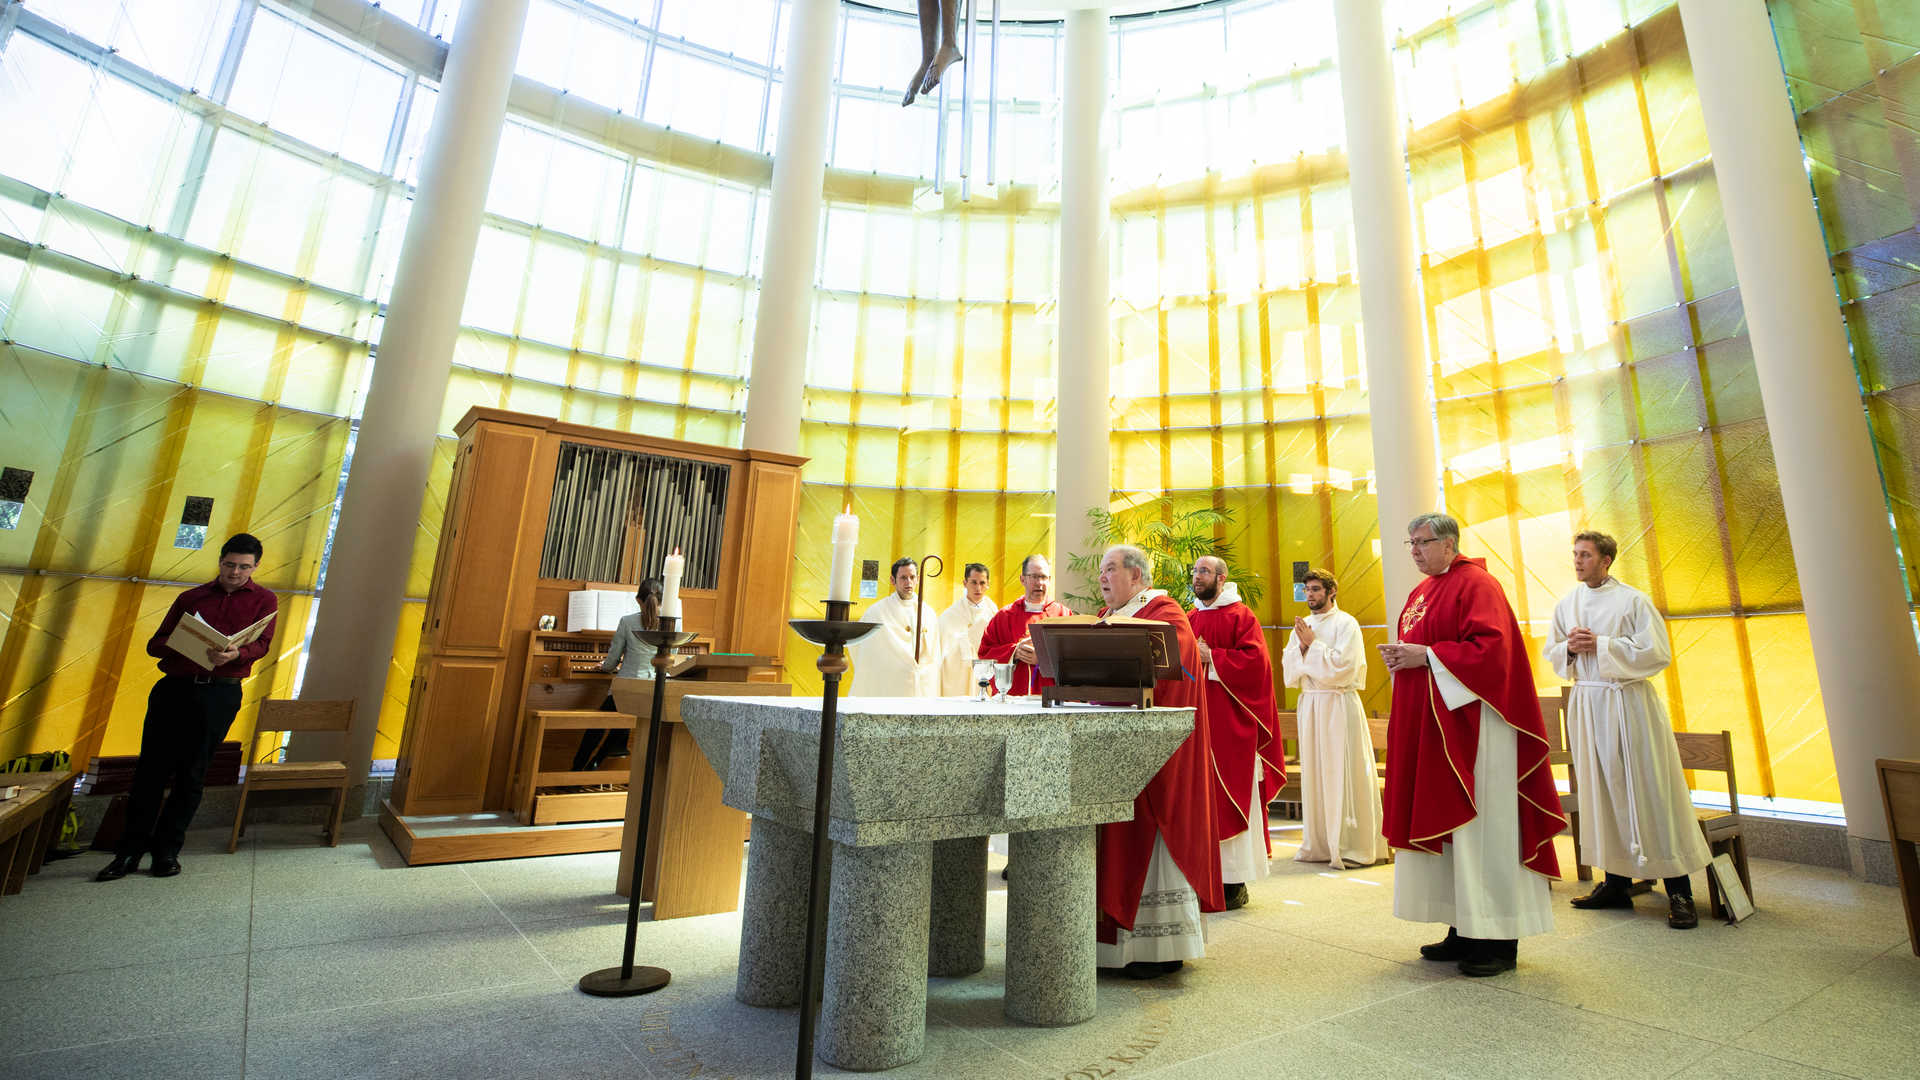 Archbishop Bernard Hebda officiates opening mass in the St. Thomas More chapel